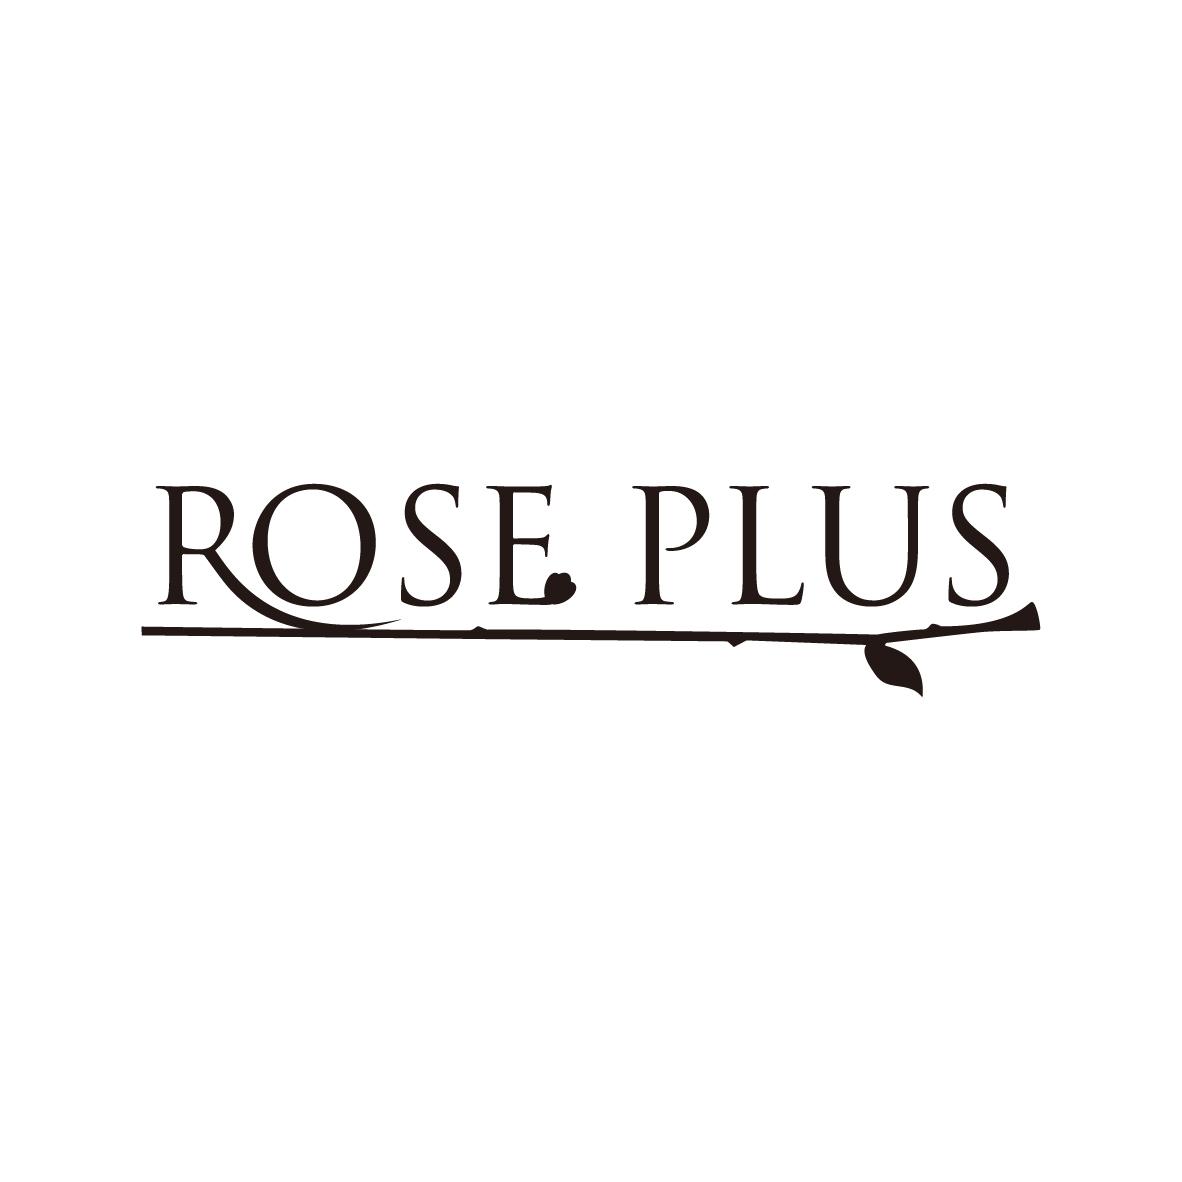 ROSE PLUS红糖商标转让费用买卖交易流程